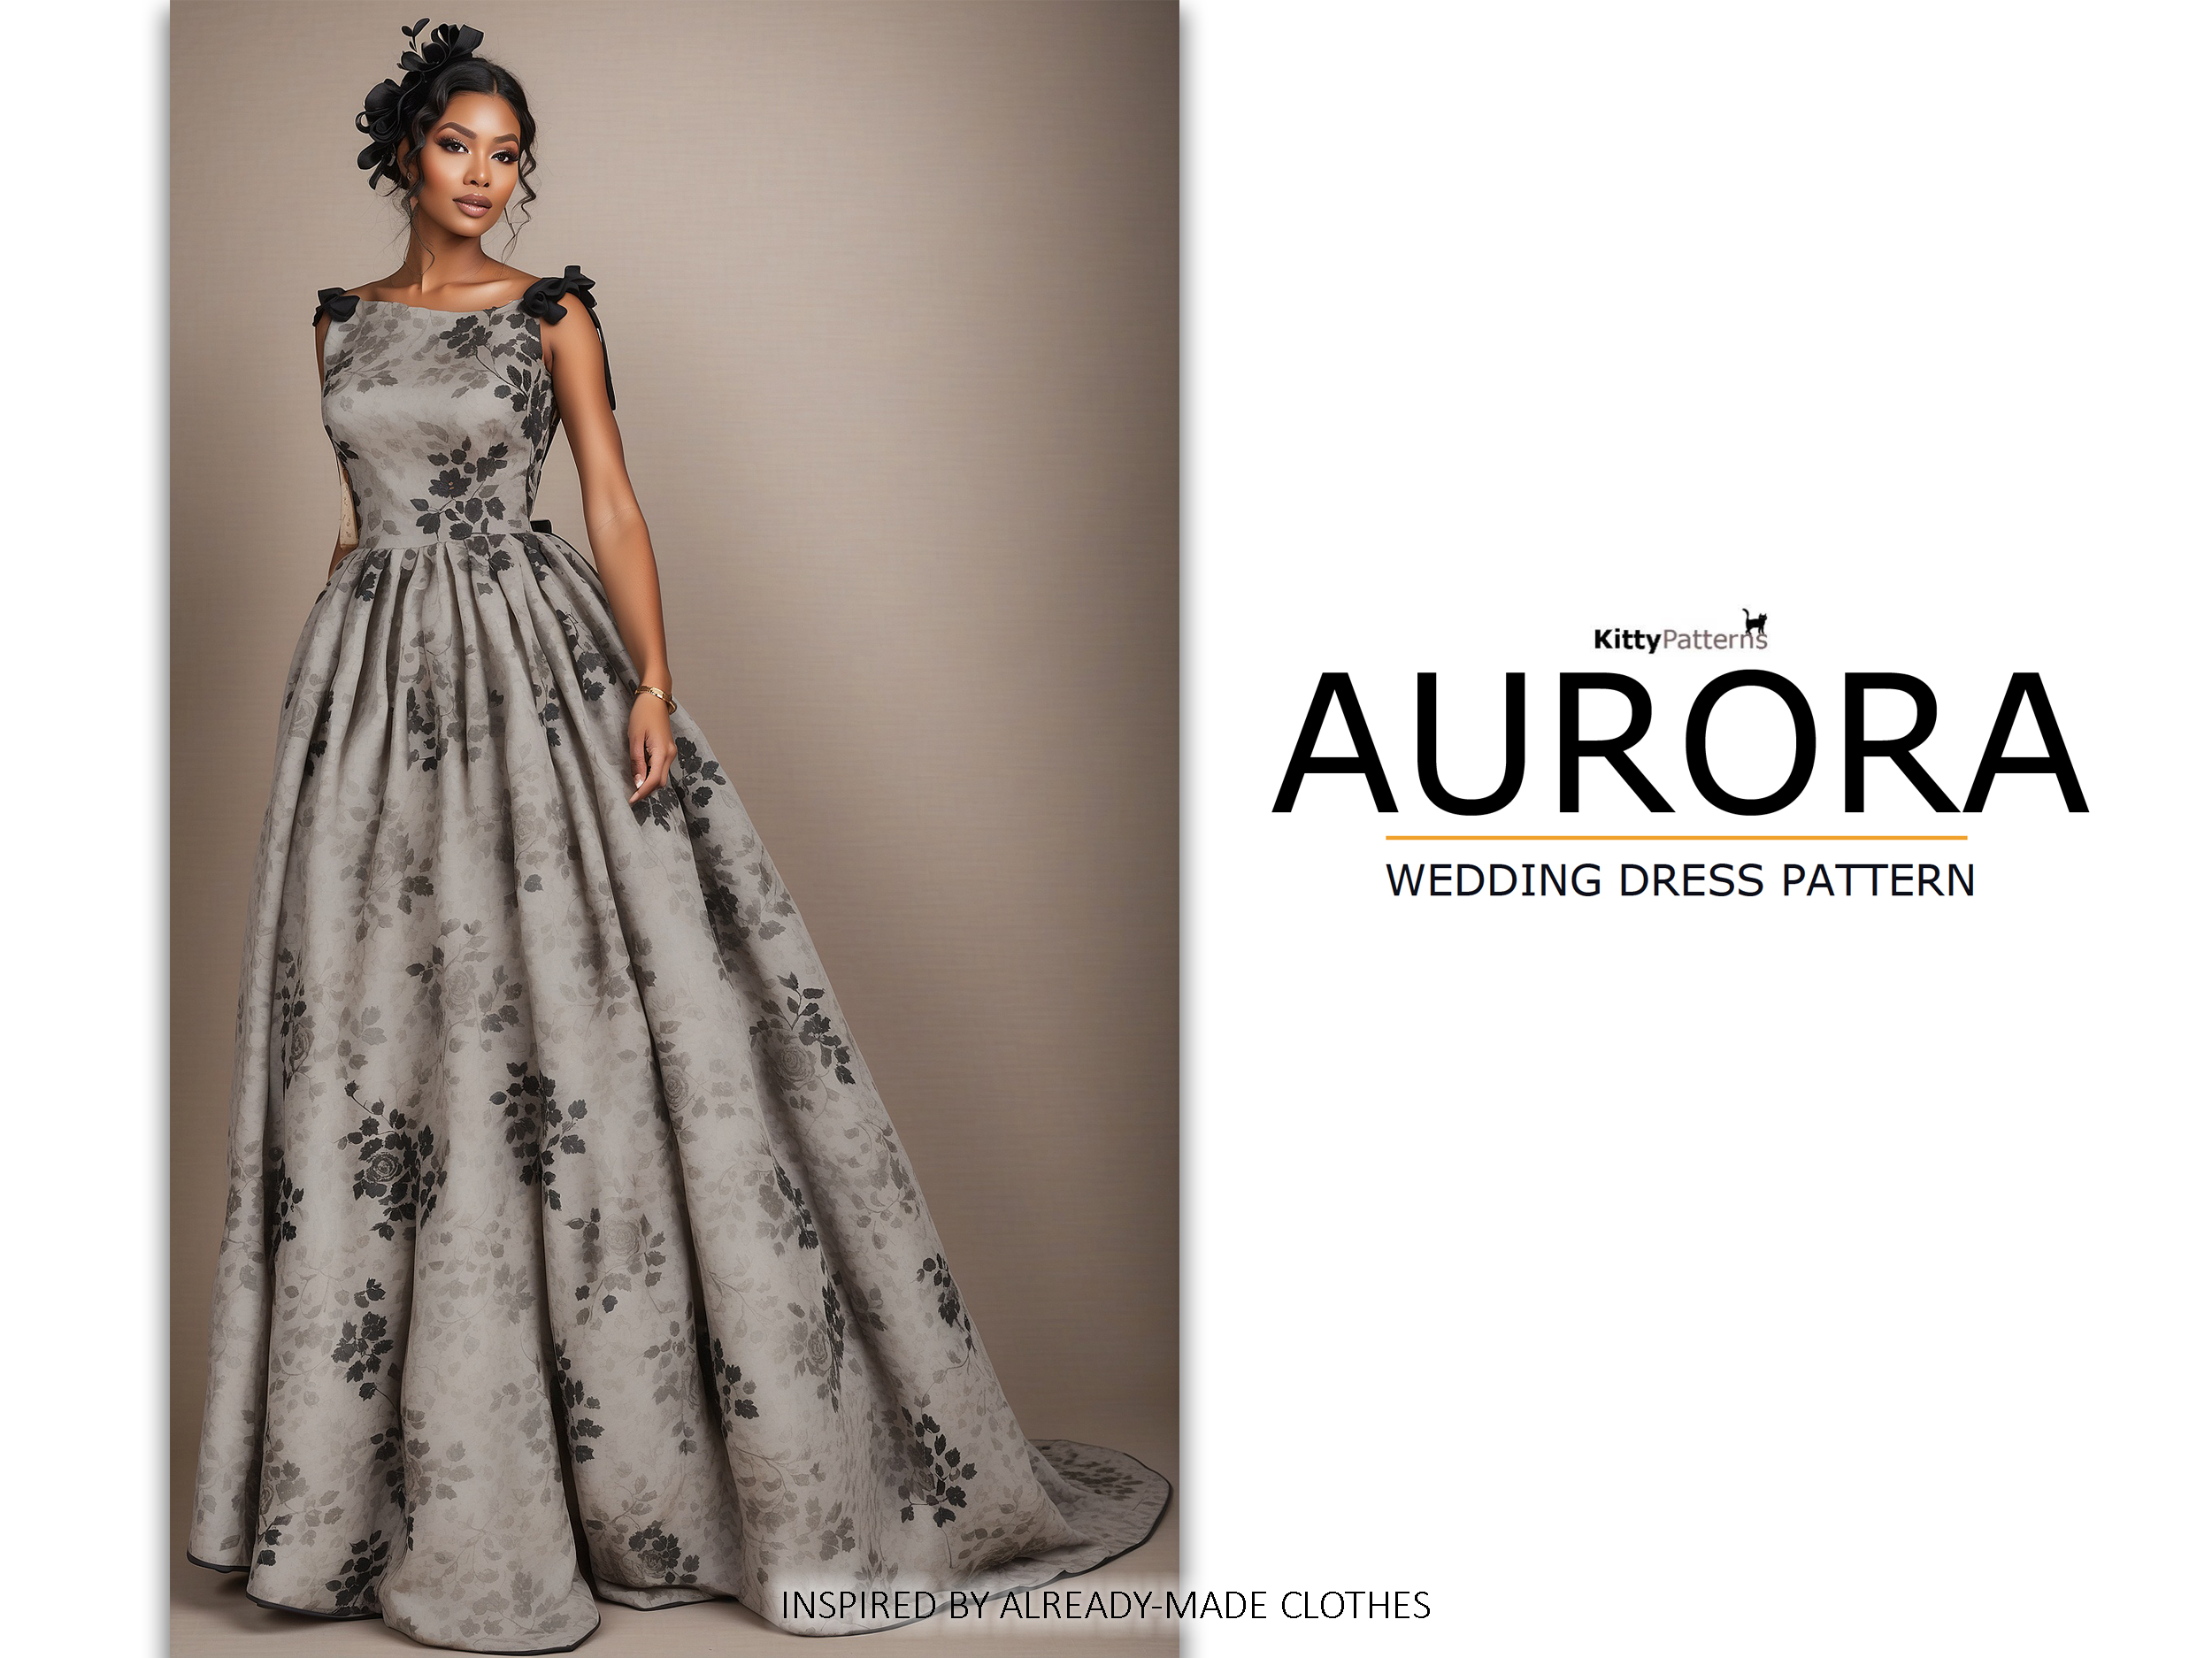 Wedding Dress Patterns - 15+ Free EPS, AI, Illustration Format Download!